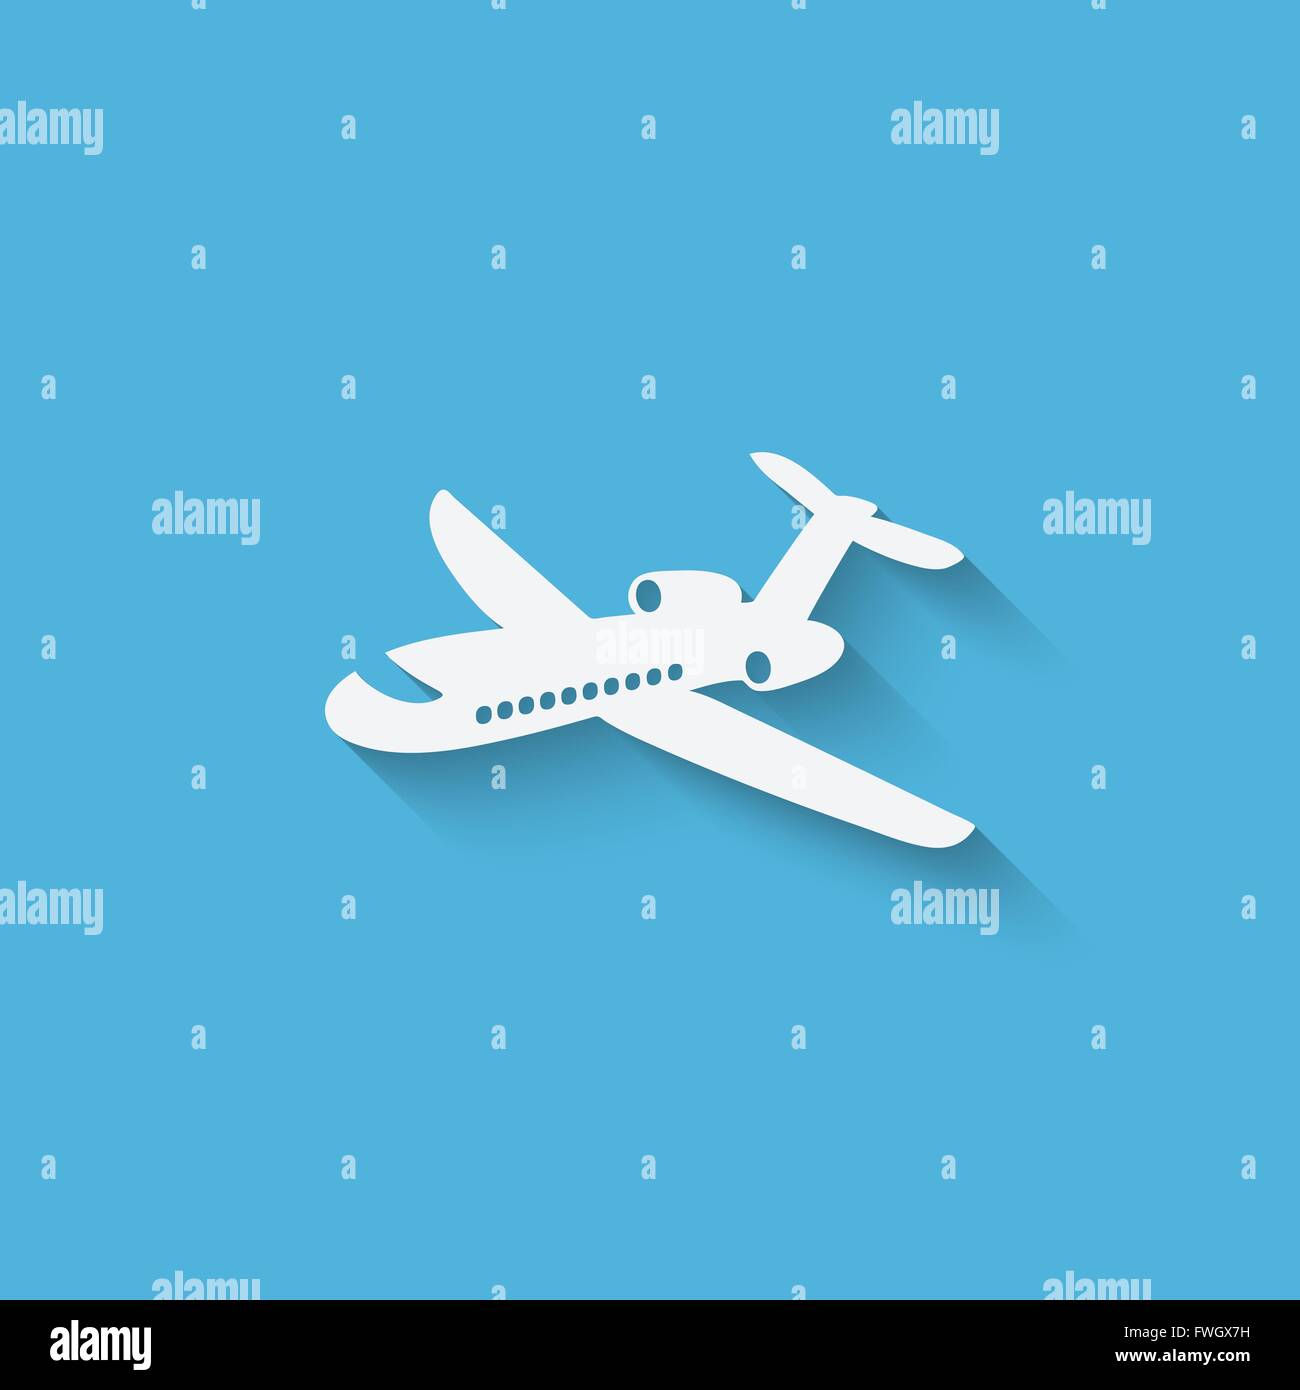 aircraft design element  - vector illustration. eps 10 Stock Vector